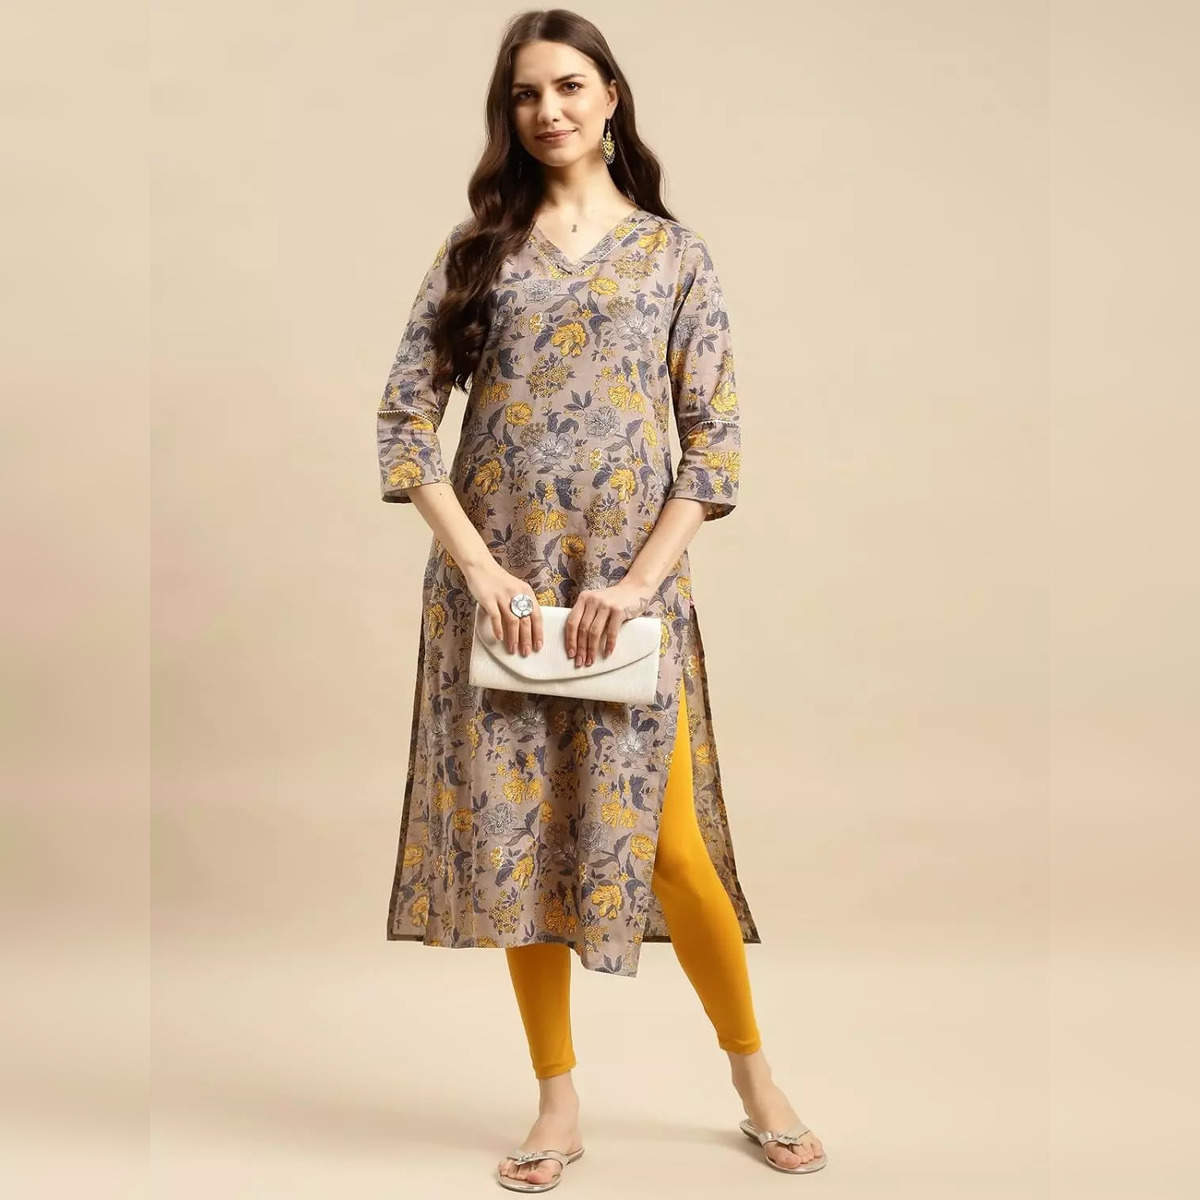 https://img.etimg.com/thumb/width-1200,height-1200,imgsize-86148,resizemode-75,msid-103926633/top-trending-products/lifestyle/5-best-cotton-leggings-for-women-in-india-for-maximum-comfort.jpg